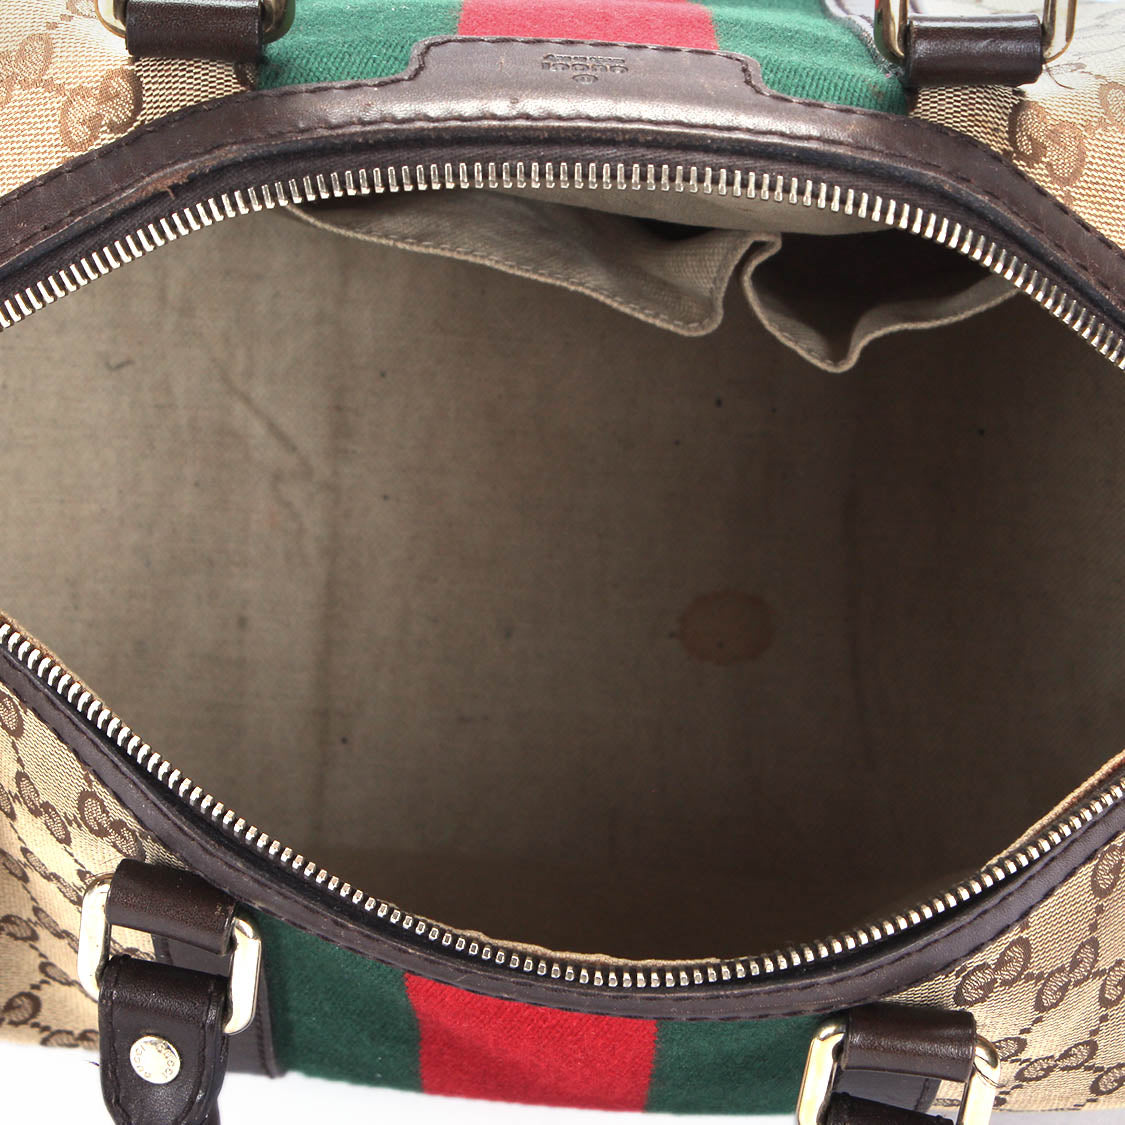 Gucci Vintage Web Original GG Boston Bag in Good Condition (247205)